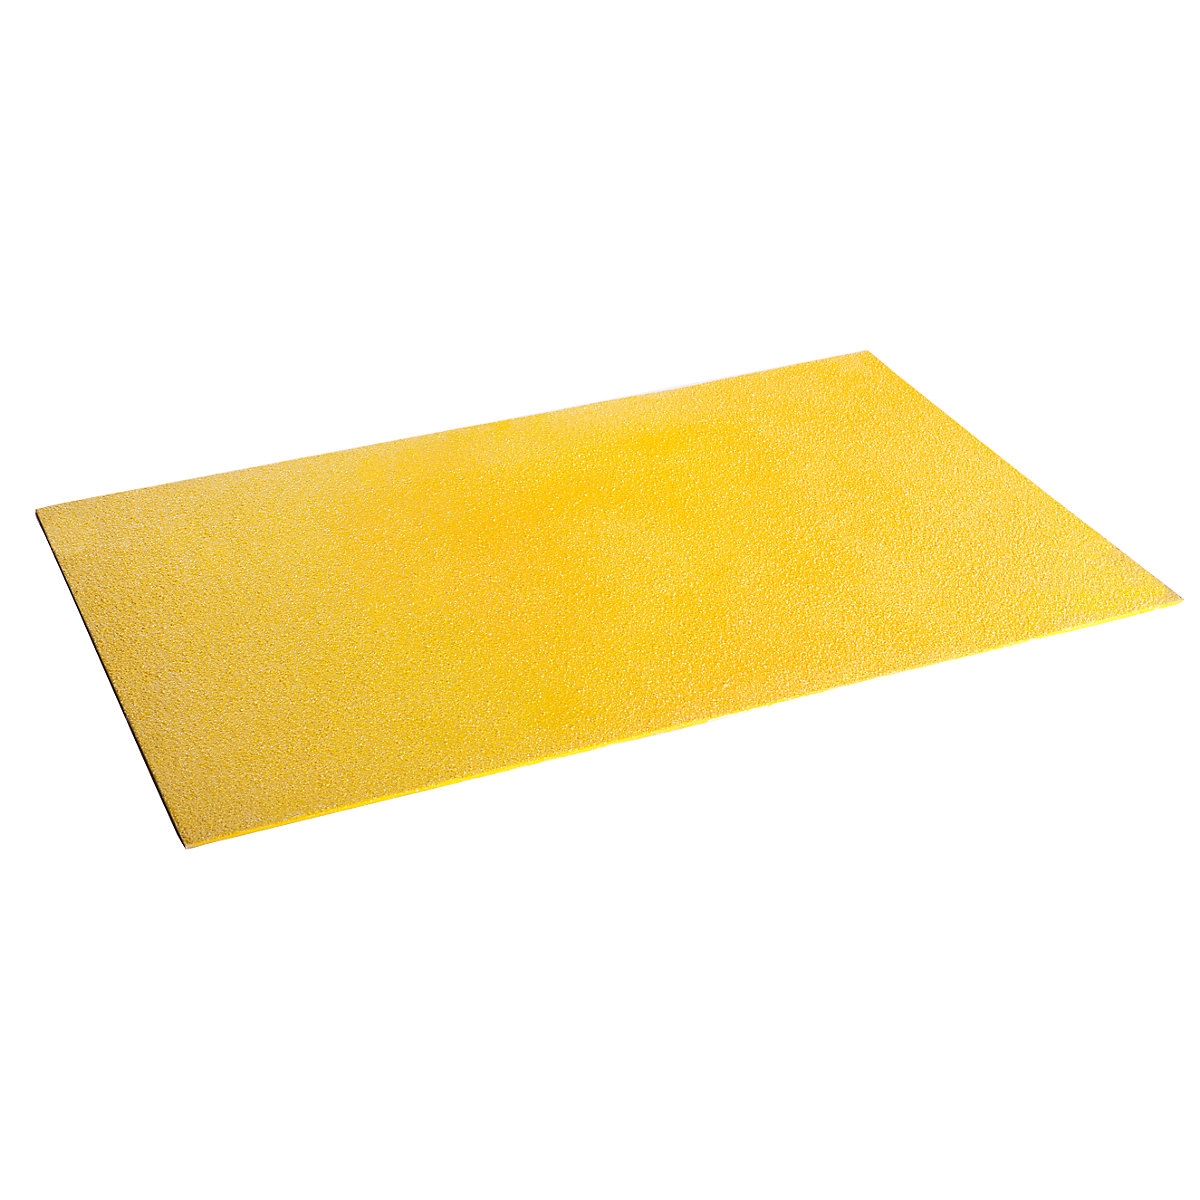 Bodenplatte, rutschfest, LxB 1200 x 800 mm, gelb